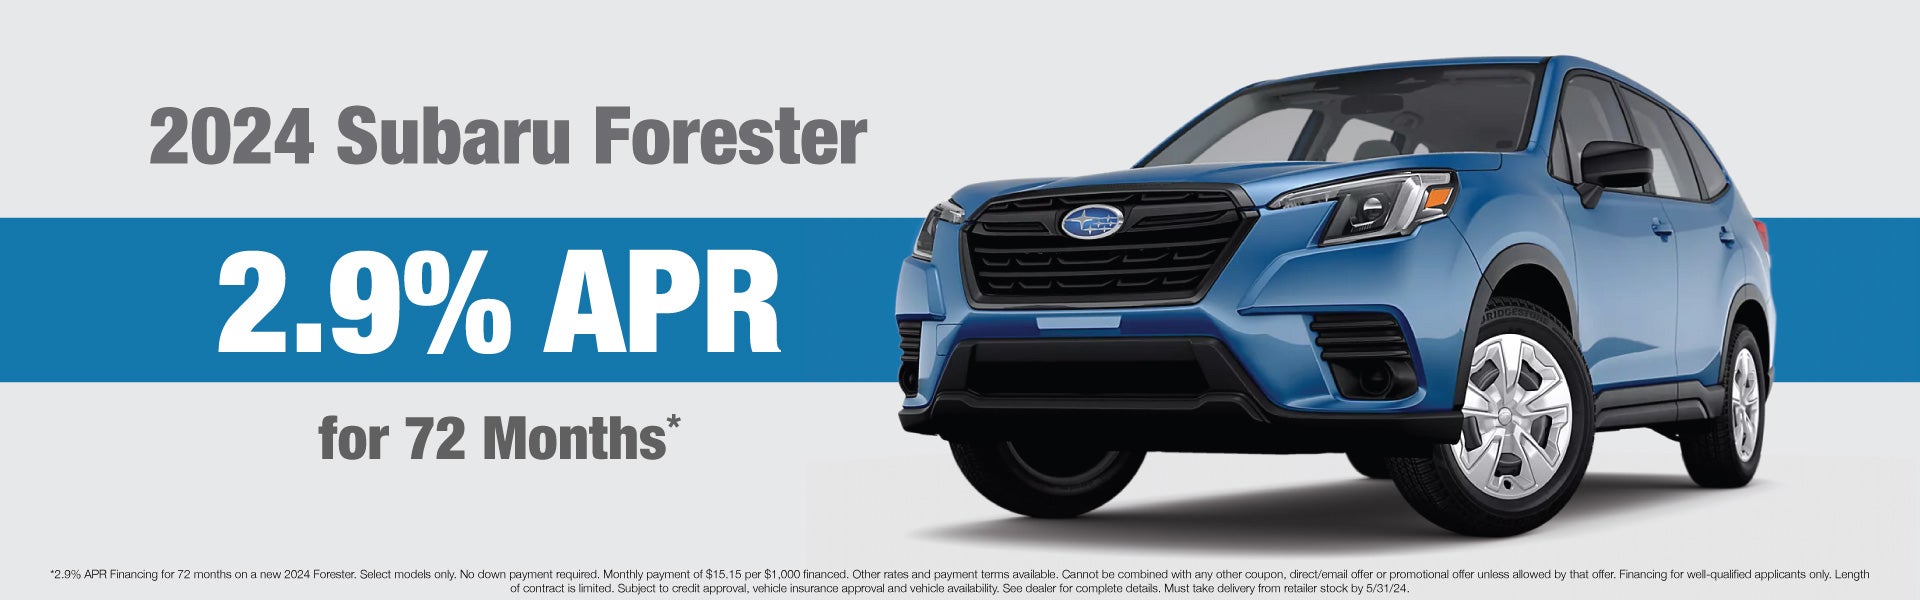 Subaru Forester Offer